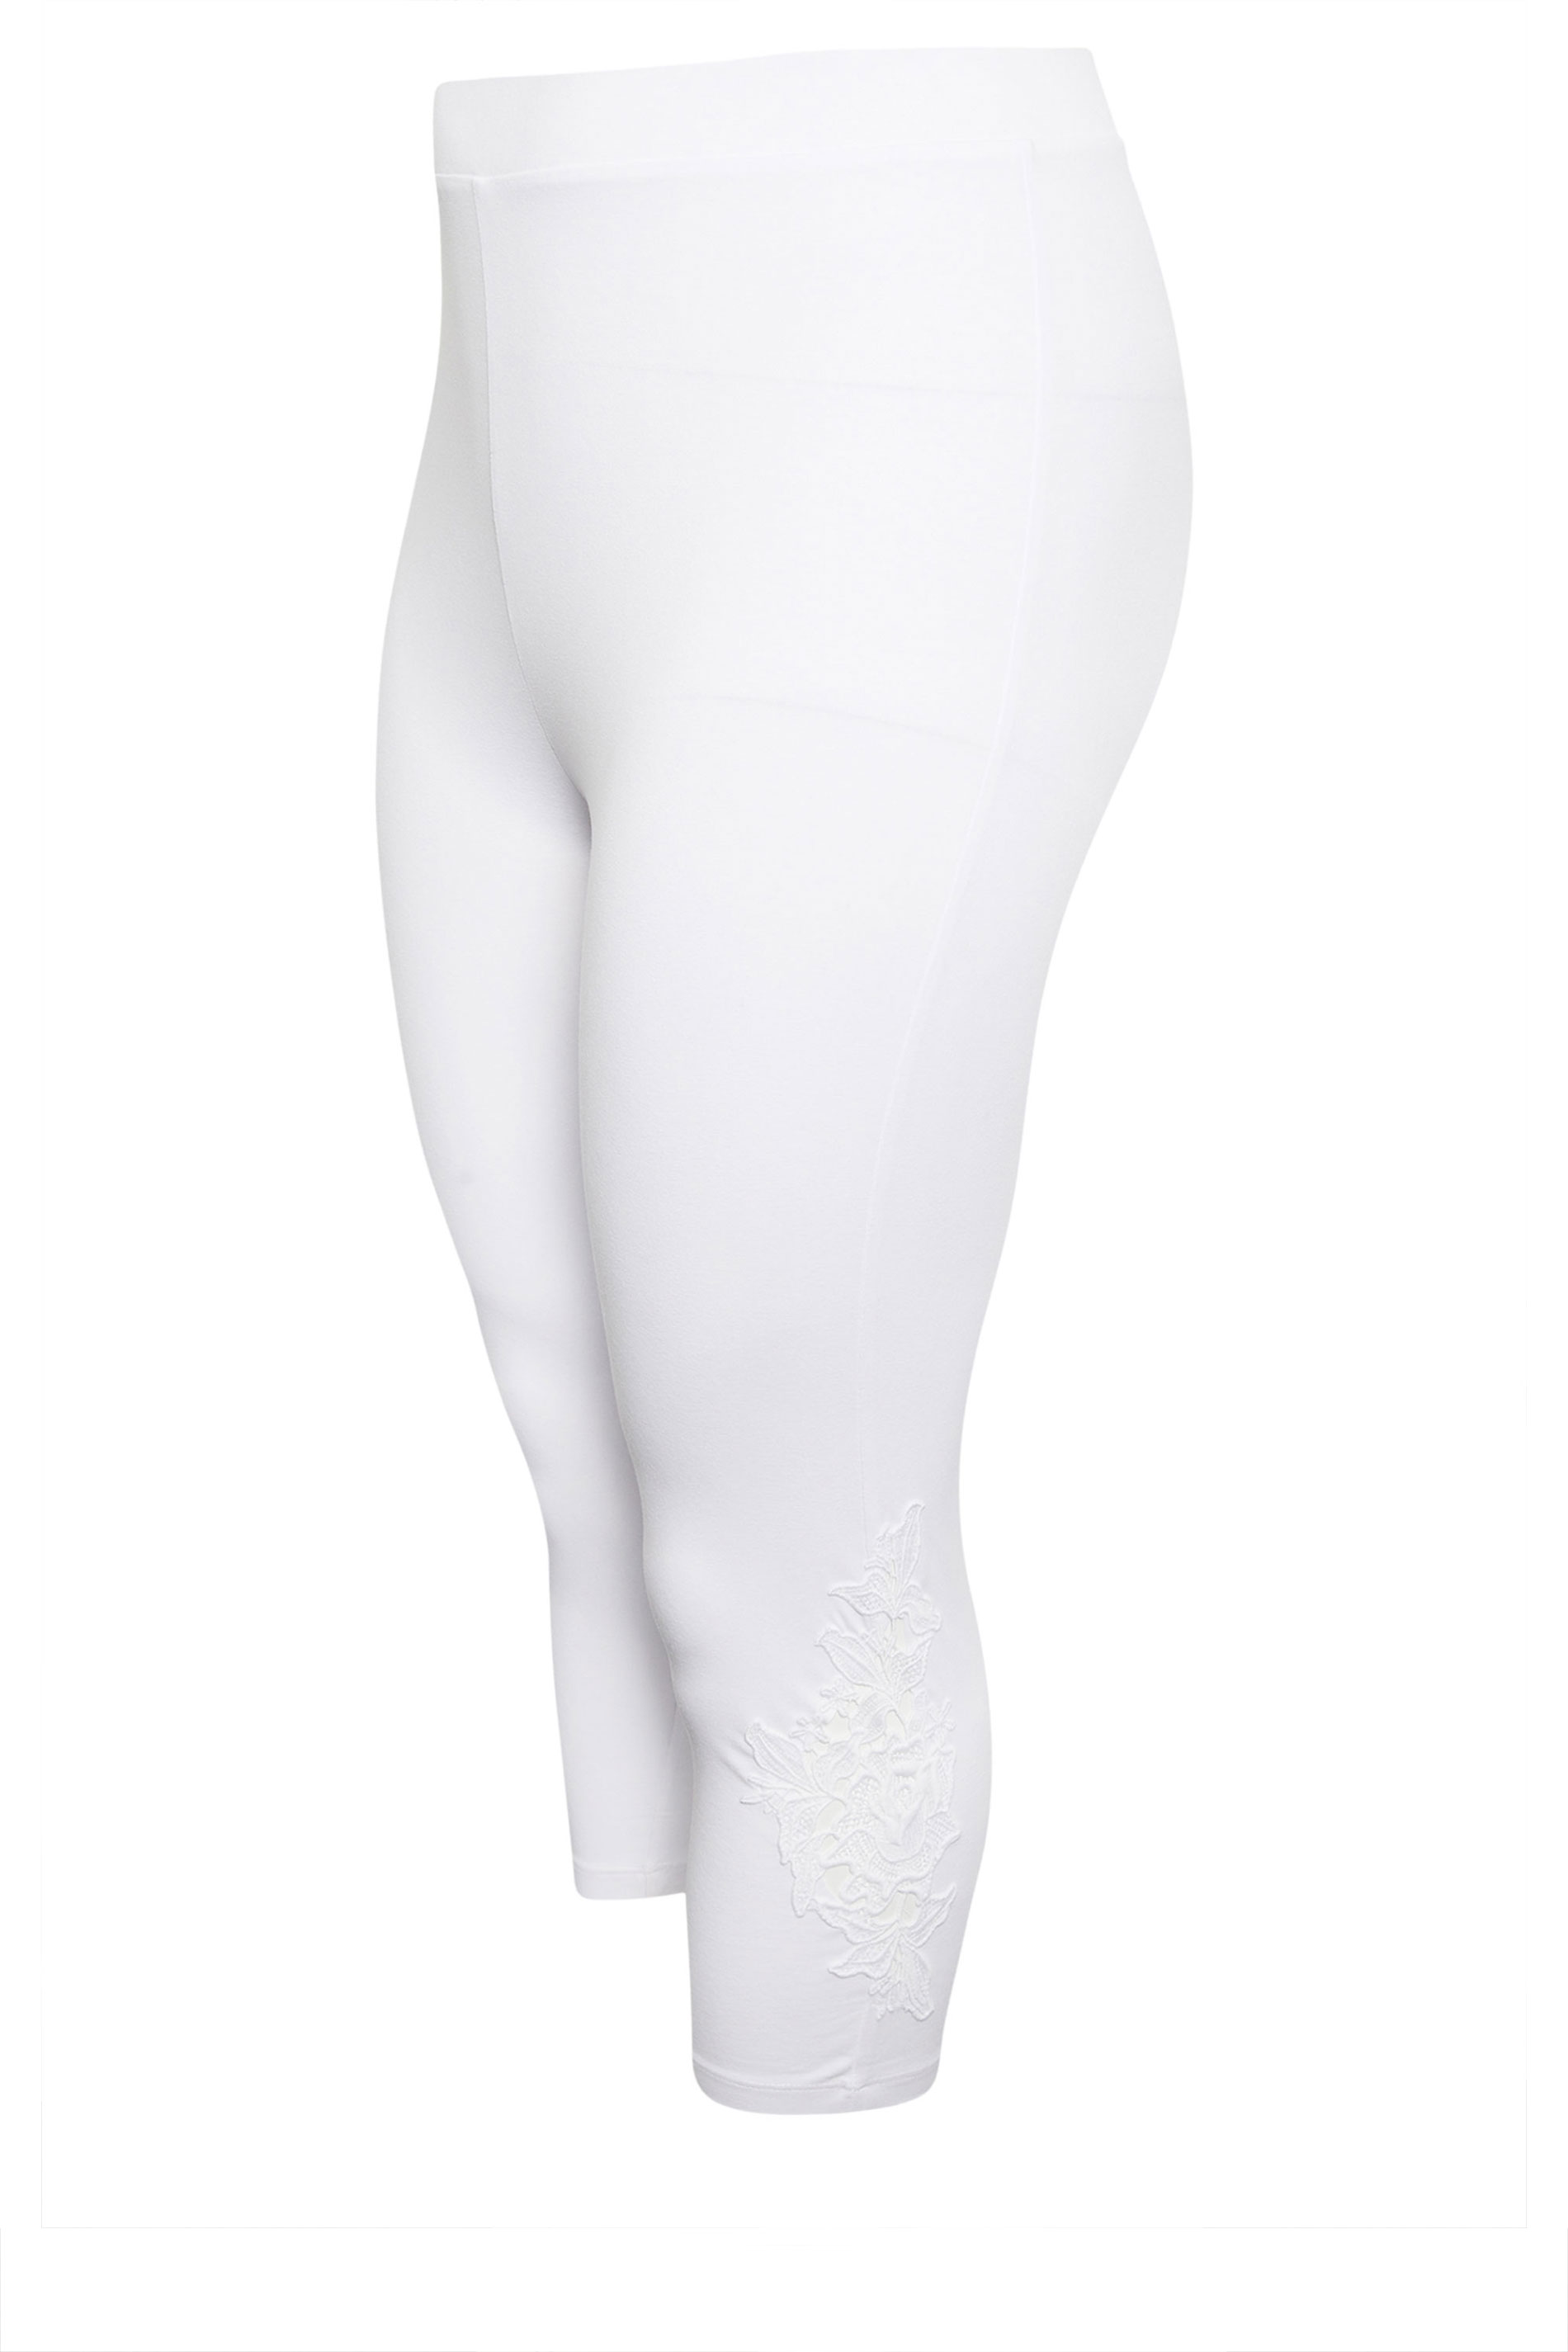 white legging capris size xs - Depop